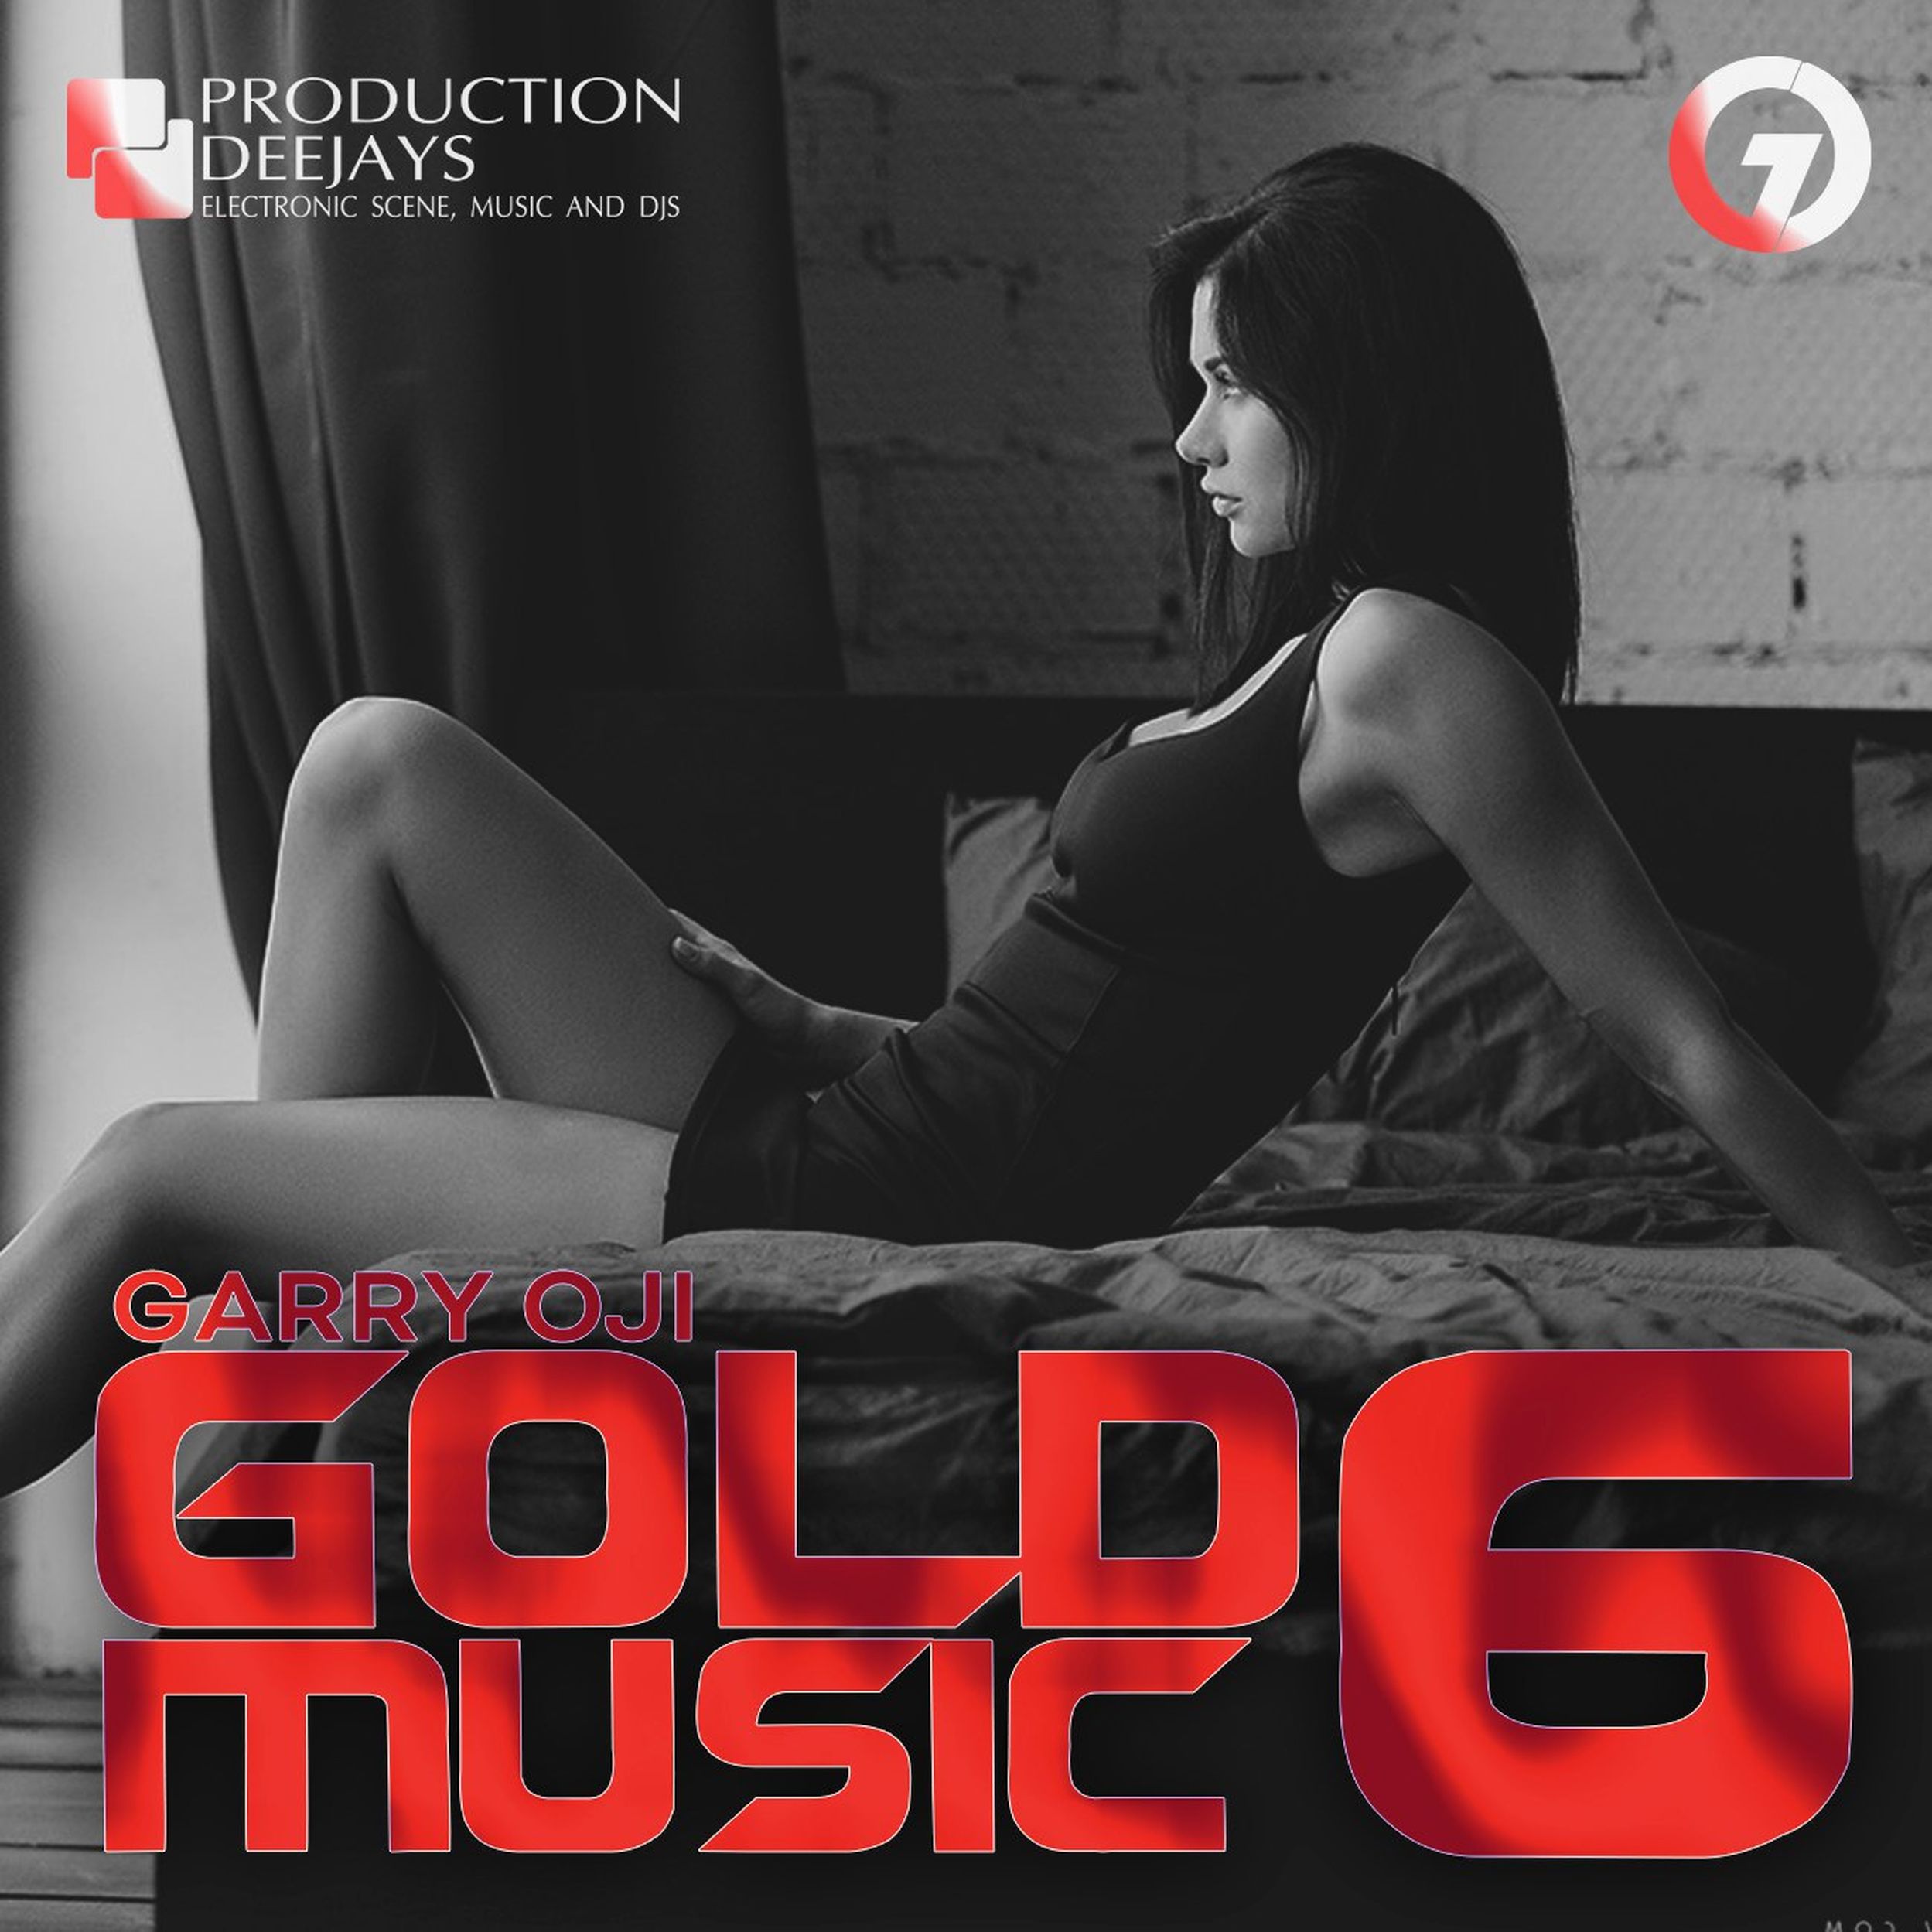 DJ Garry клуб. Jay-Lounge, NK Music - the Golden hour. M6 Music Hits.